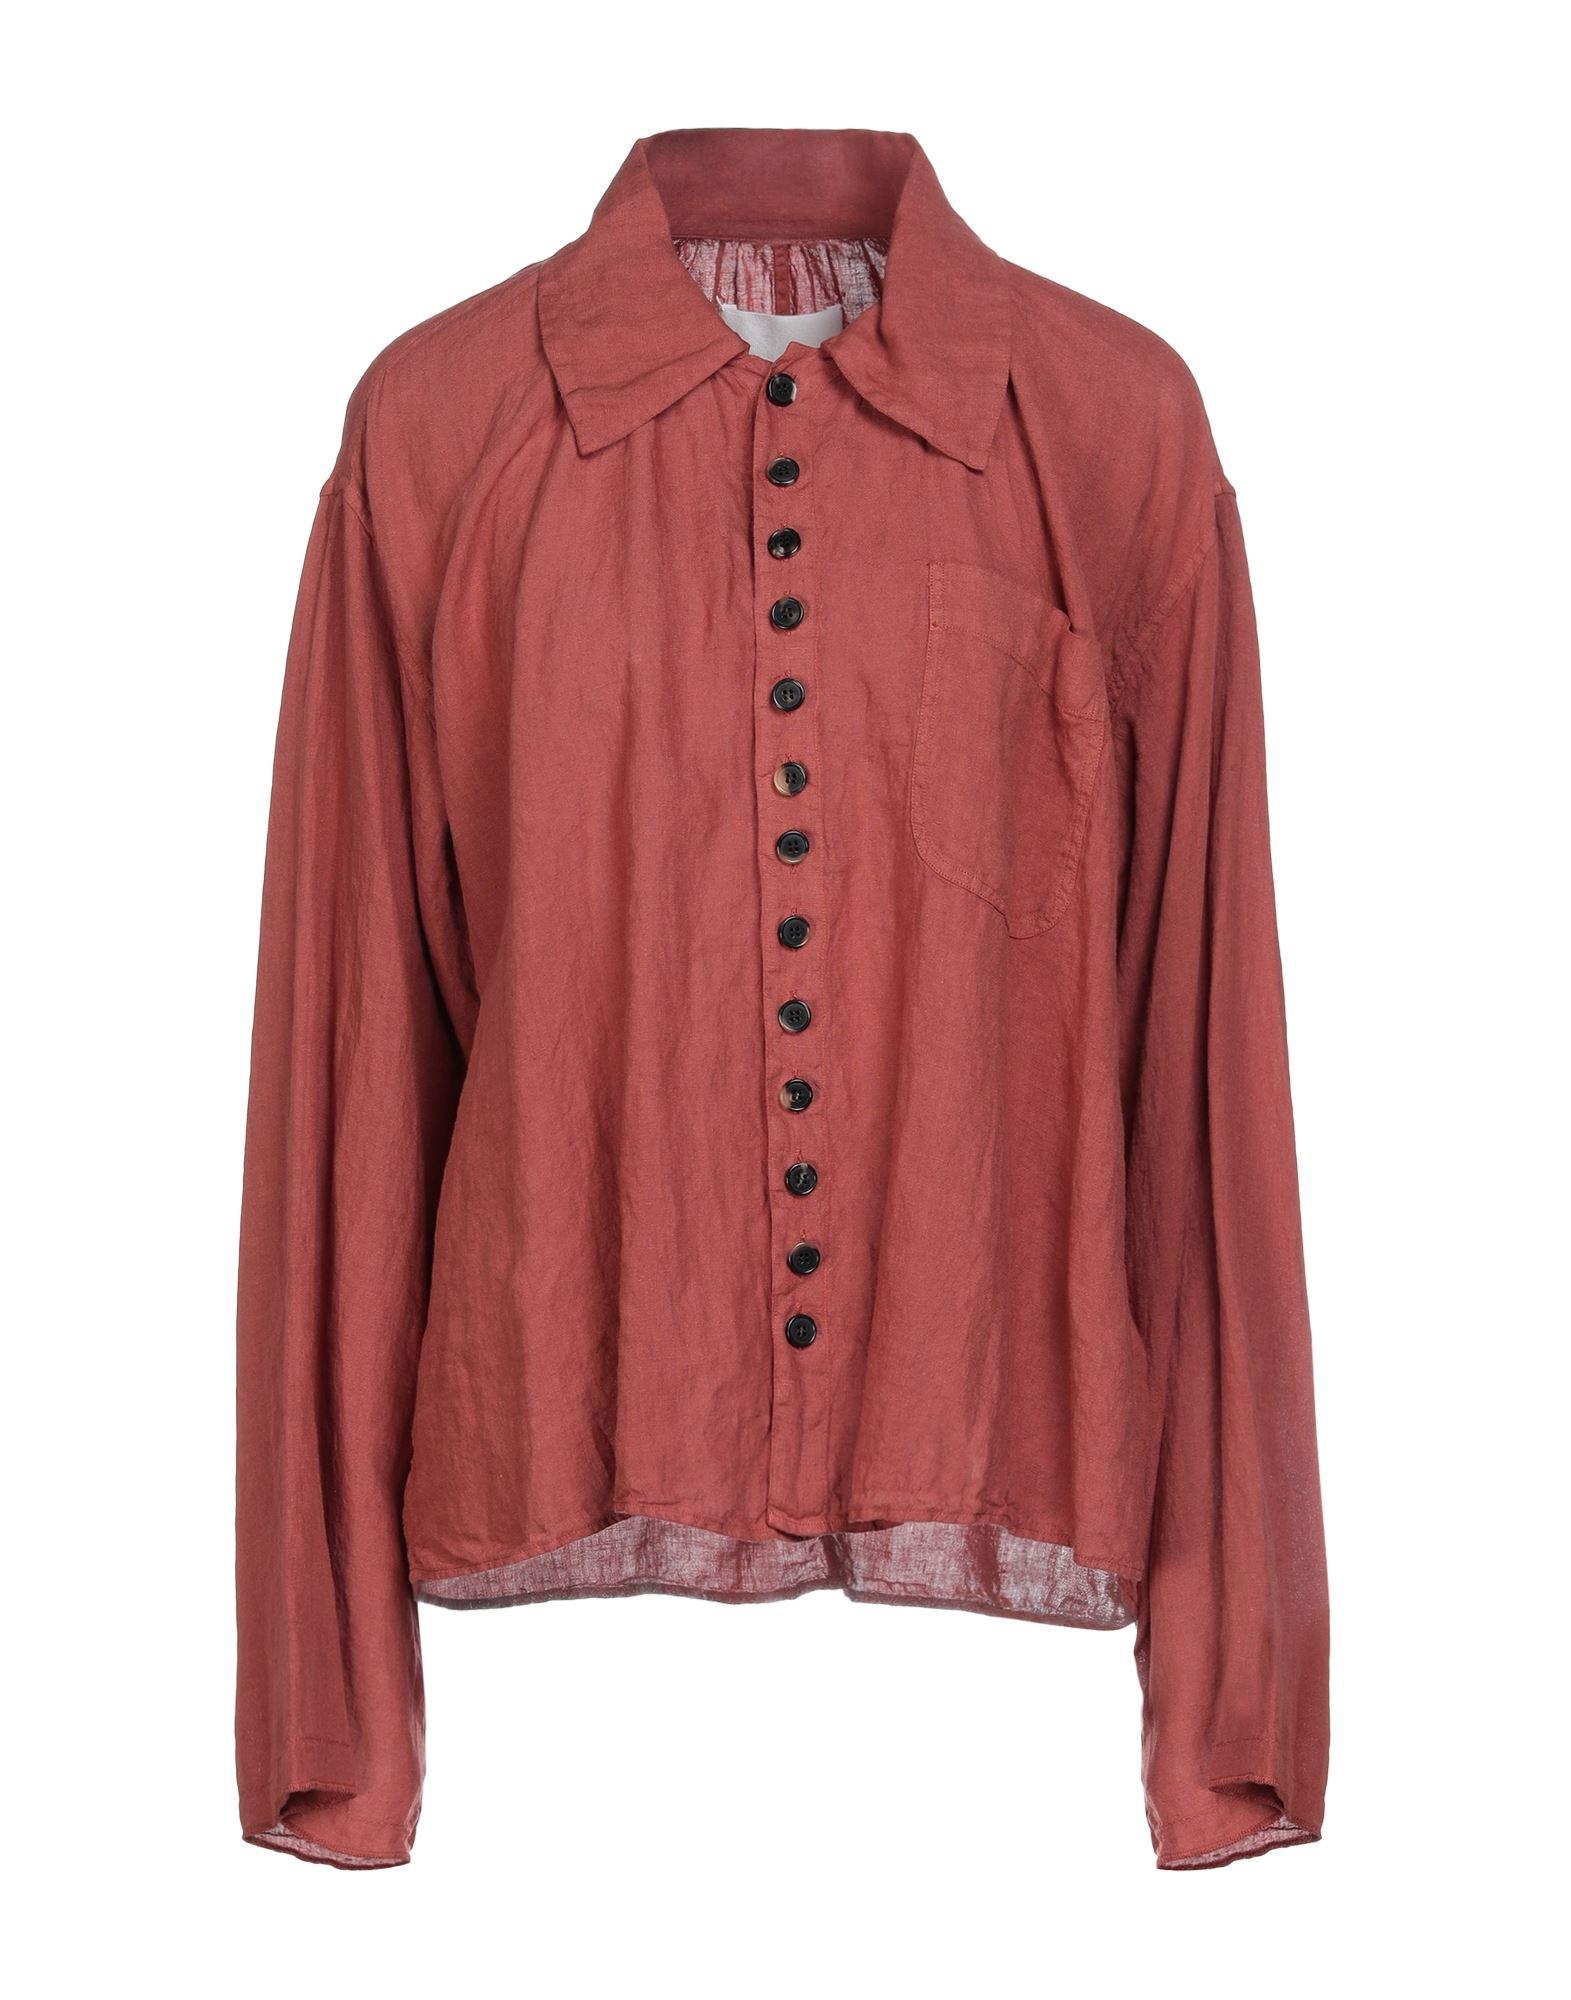 Maison Margiela Shirt in Rust (Red) - Lyst